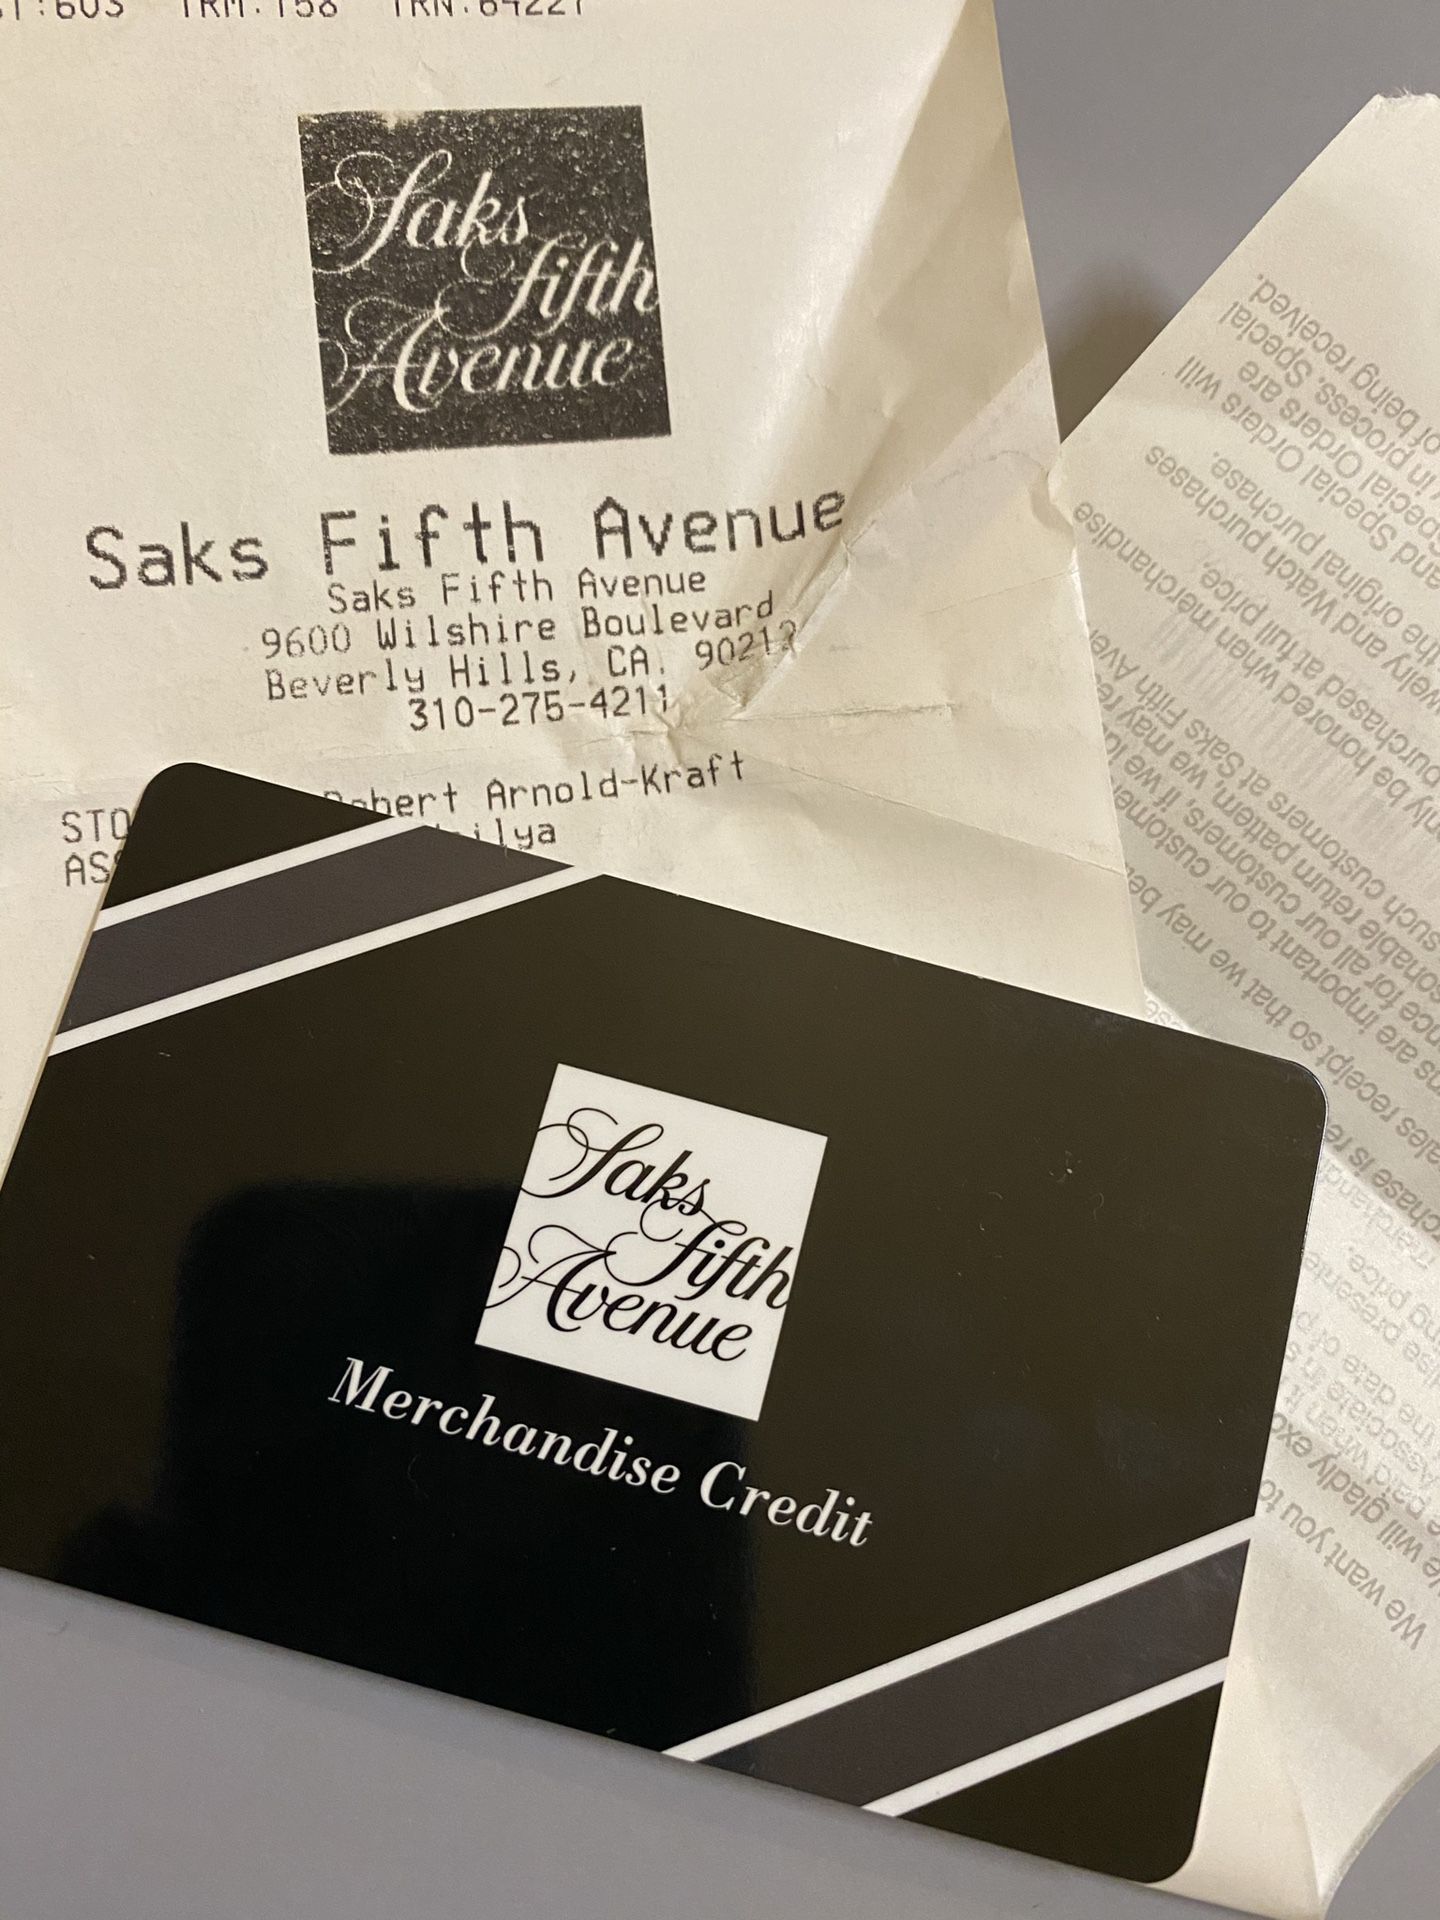 $300 worth of Saks Fifth Avenue Credit